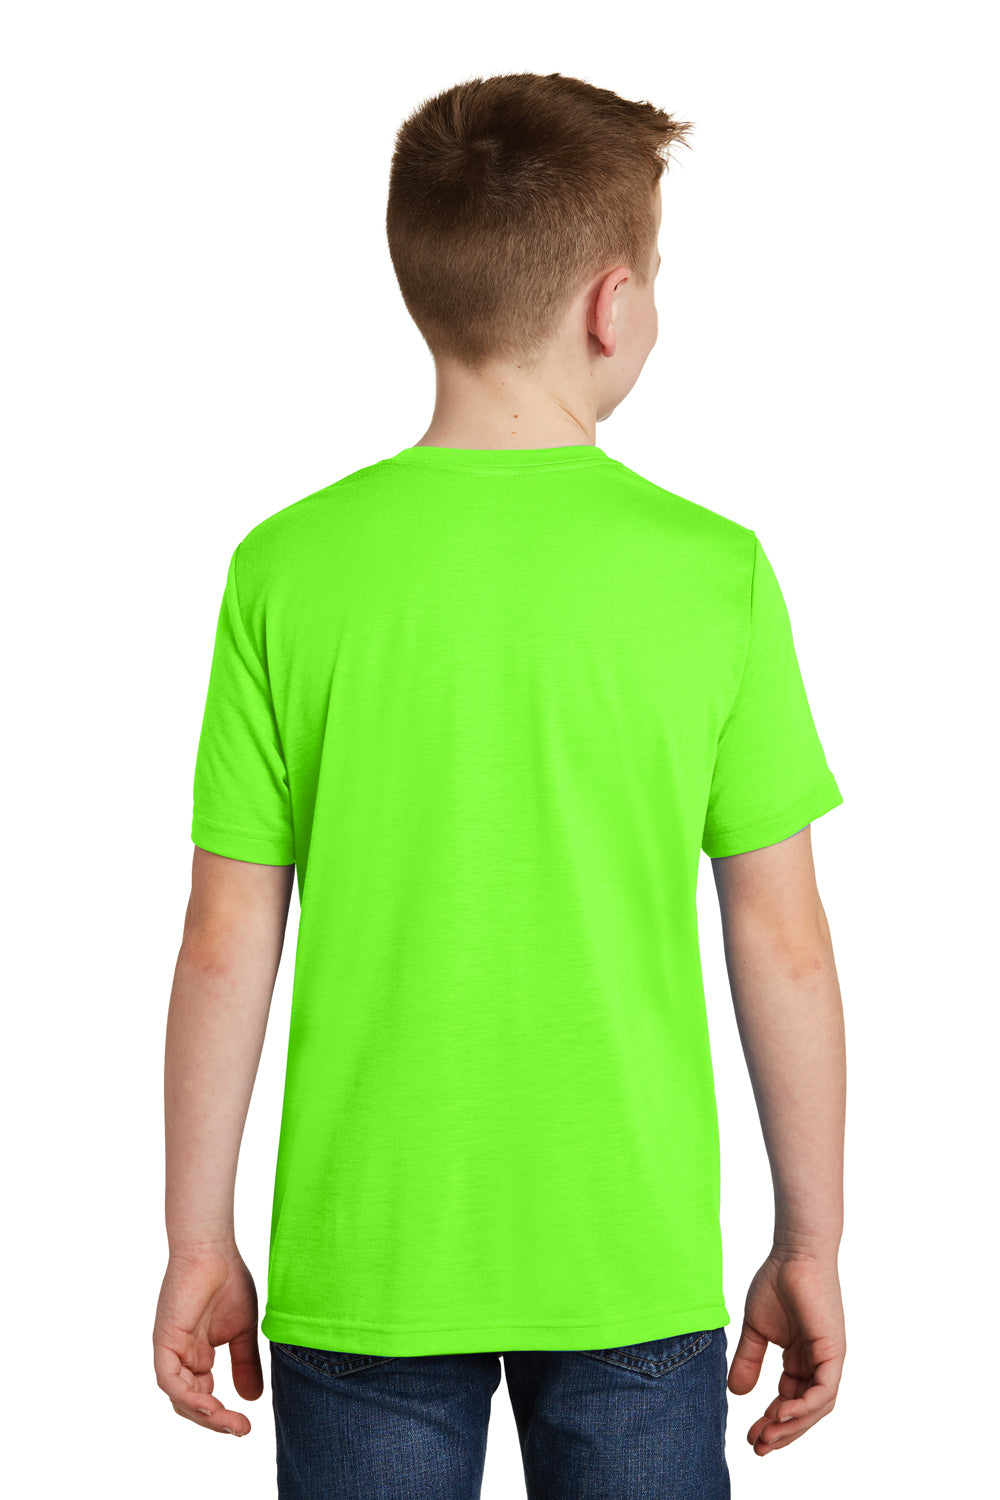 Sport-Tek YST450 Youth Competitor Moisture Wicking Short Sleeve Crewneck T-Shirt Neon Green Back